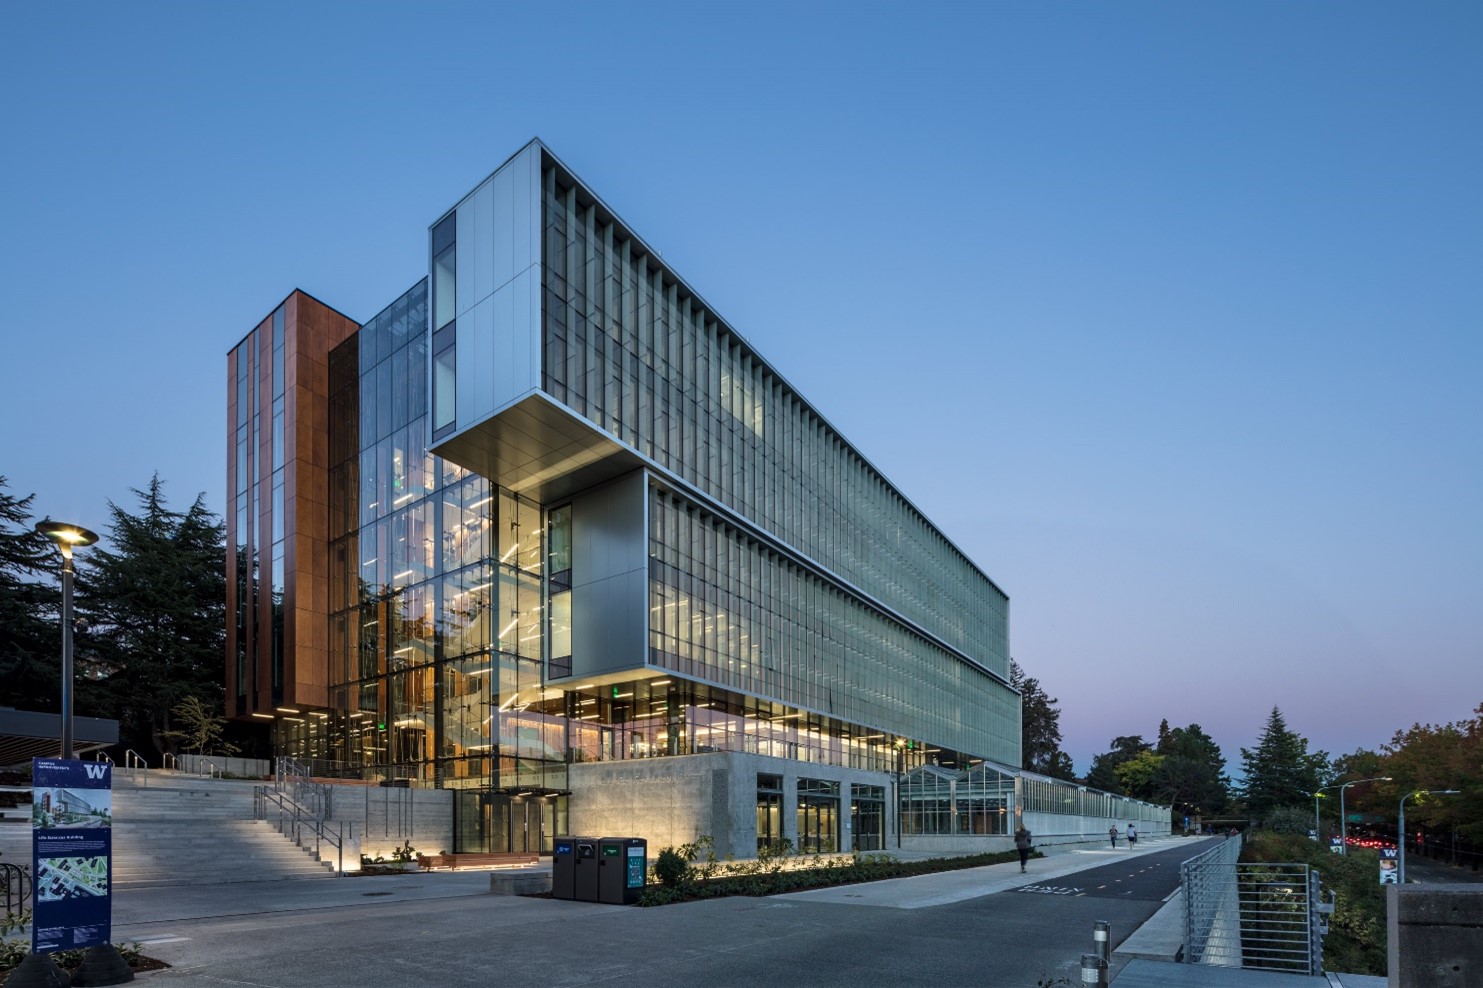 University of Washington’s Life Sciences Building